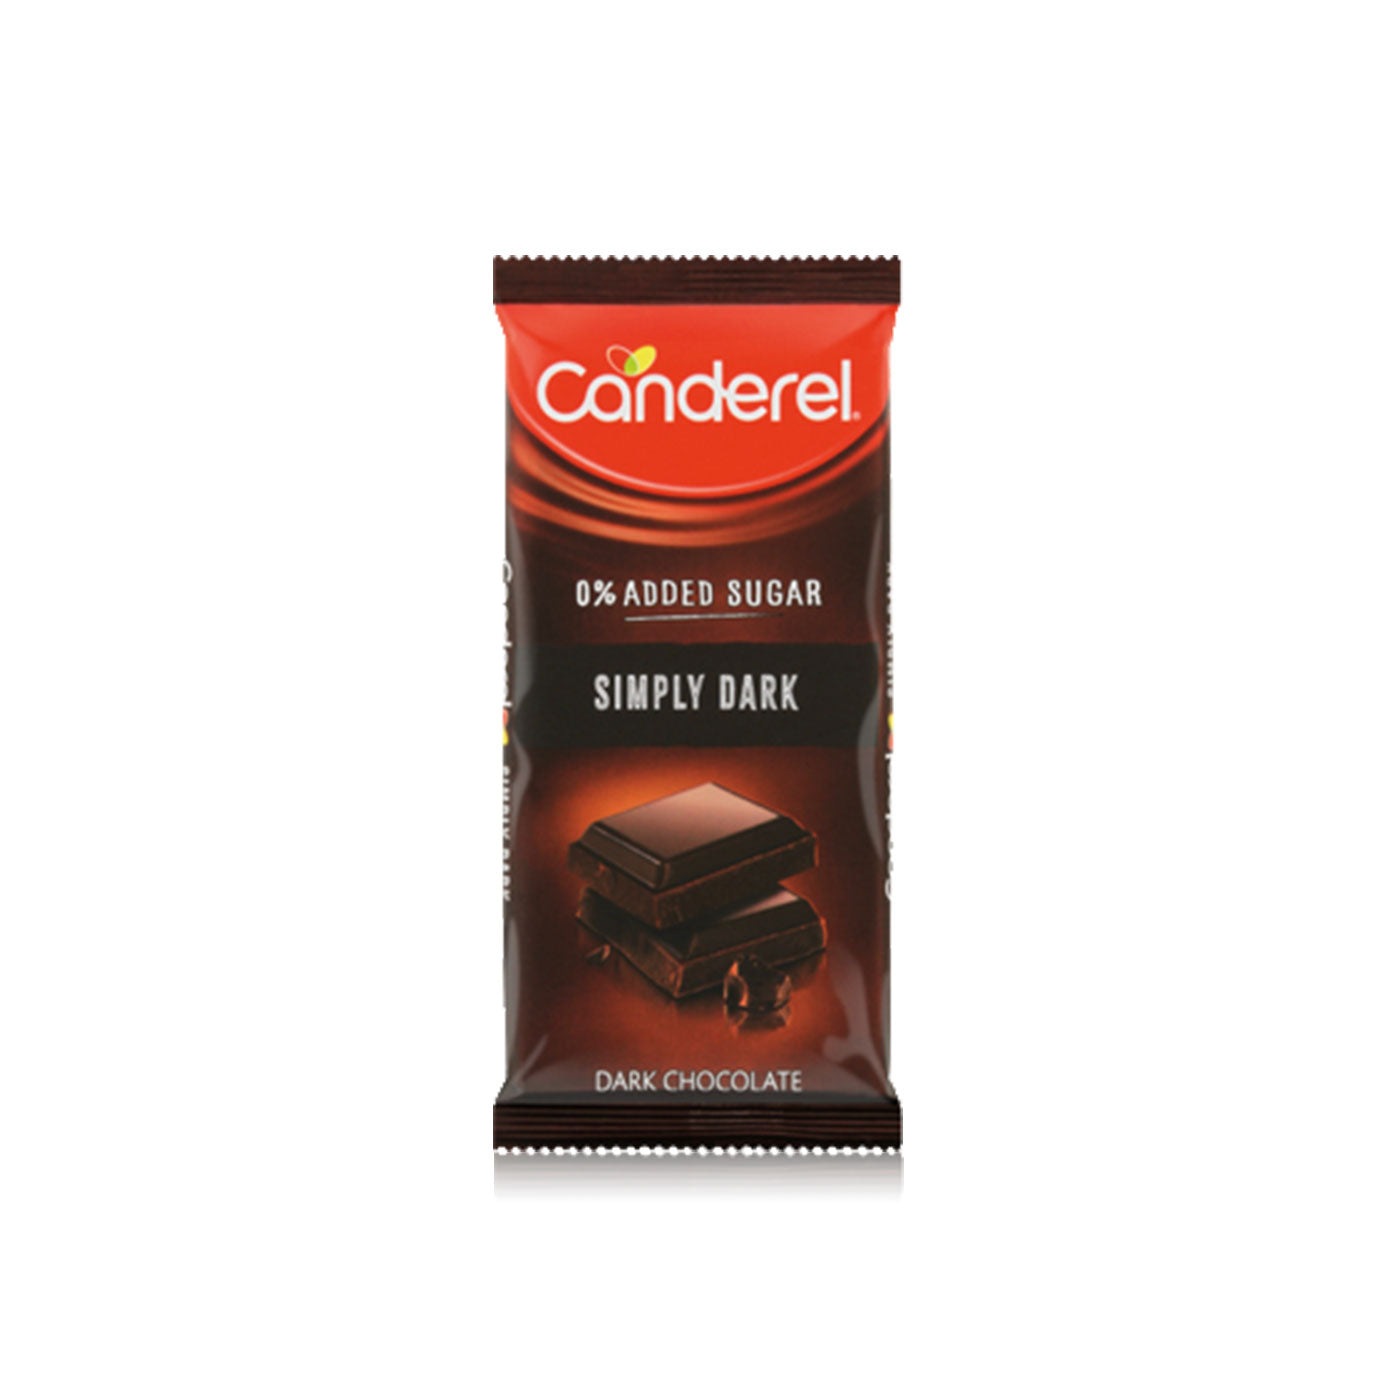 Canderel chocolate simply dark 100g - MazenOnline